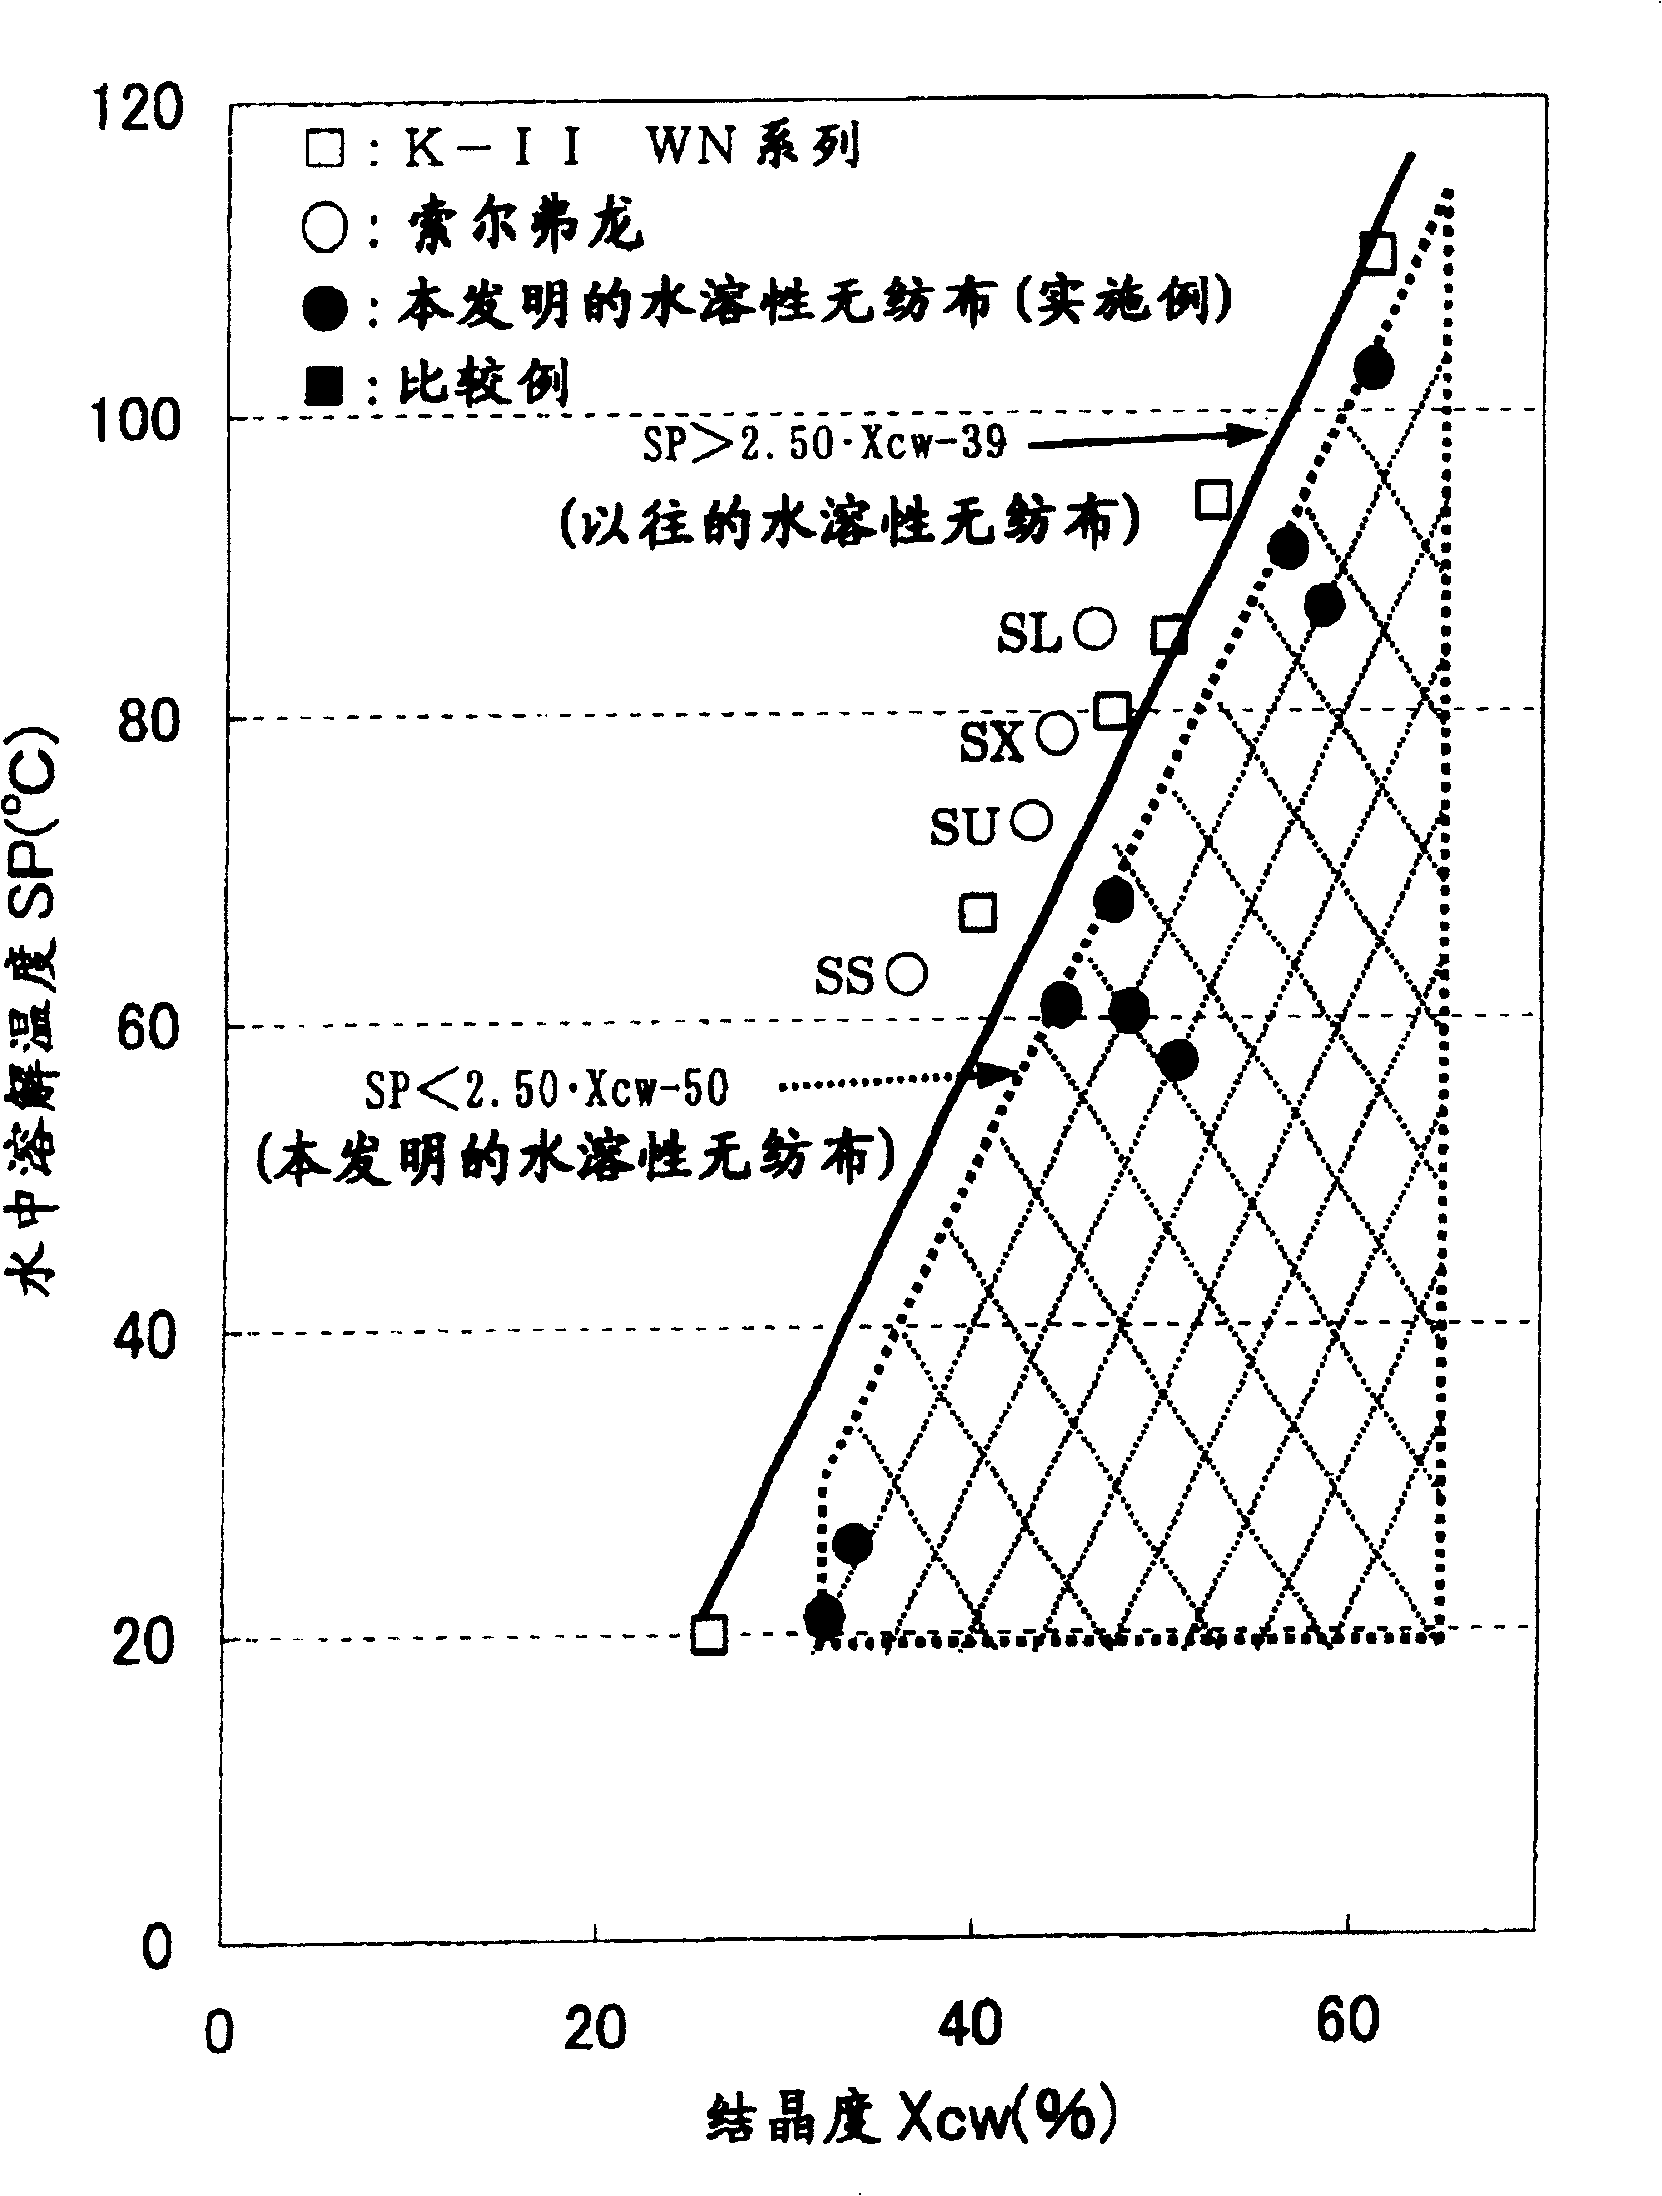 Water soluble vinylon and non-woven cloth containing the same vinylon